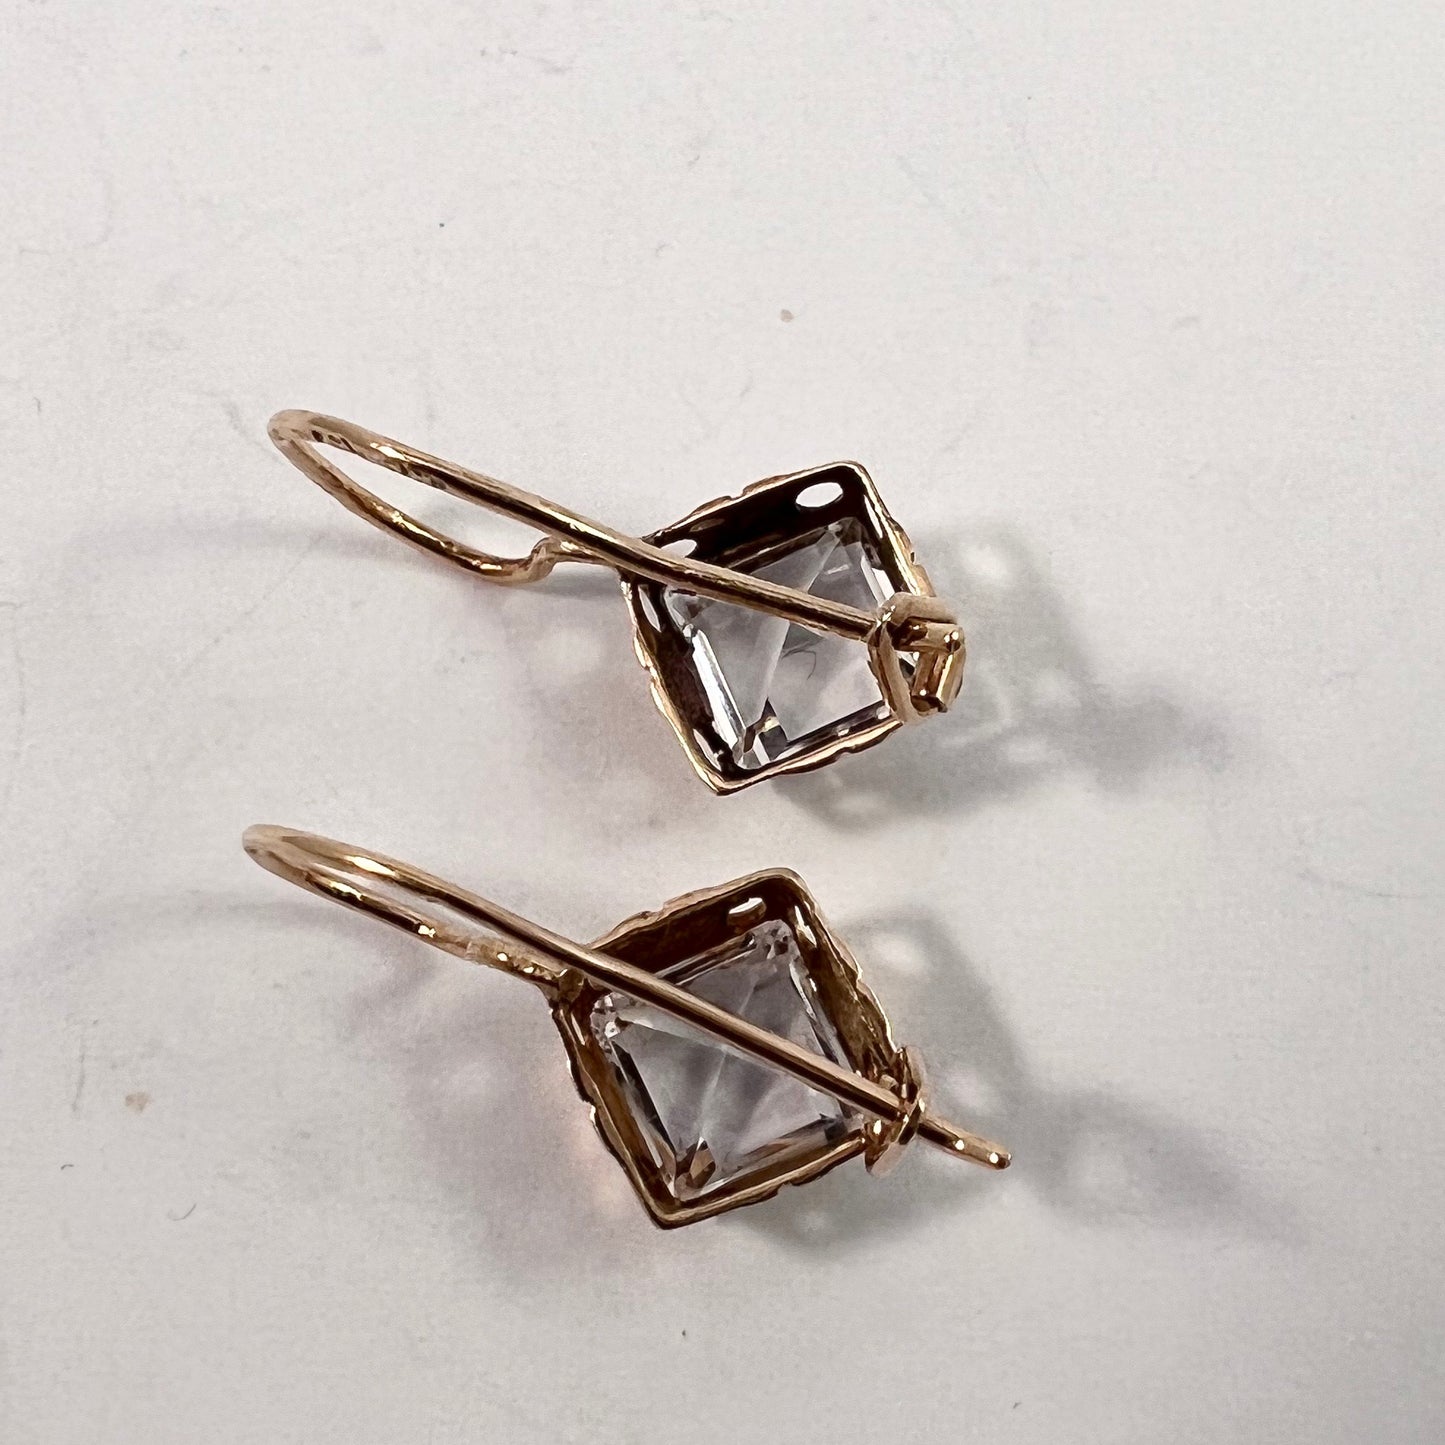 Kauko Poikolainen, Finland 1964. Vintage 14k Gold Rock Crystal Earrings.